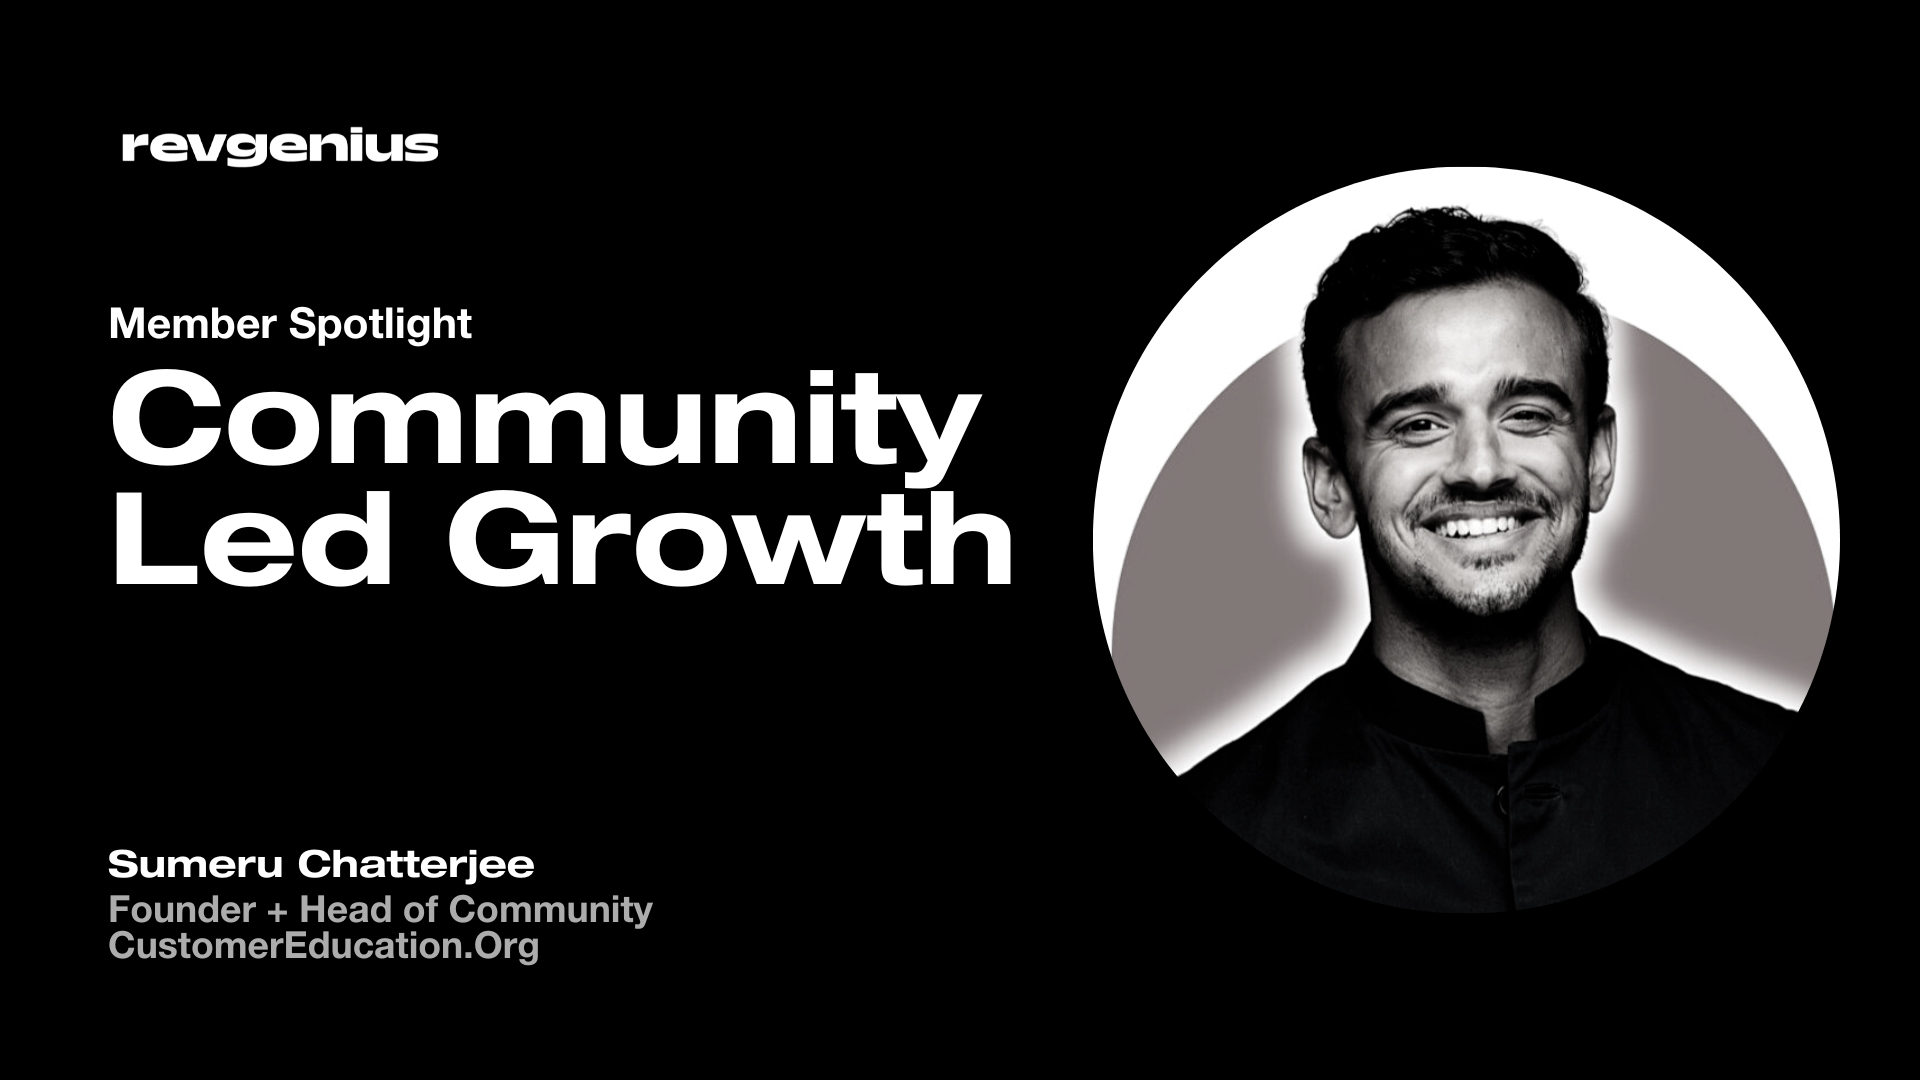 Sumeru Chatterjee on Community-Led Growth